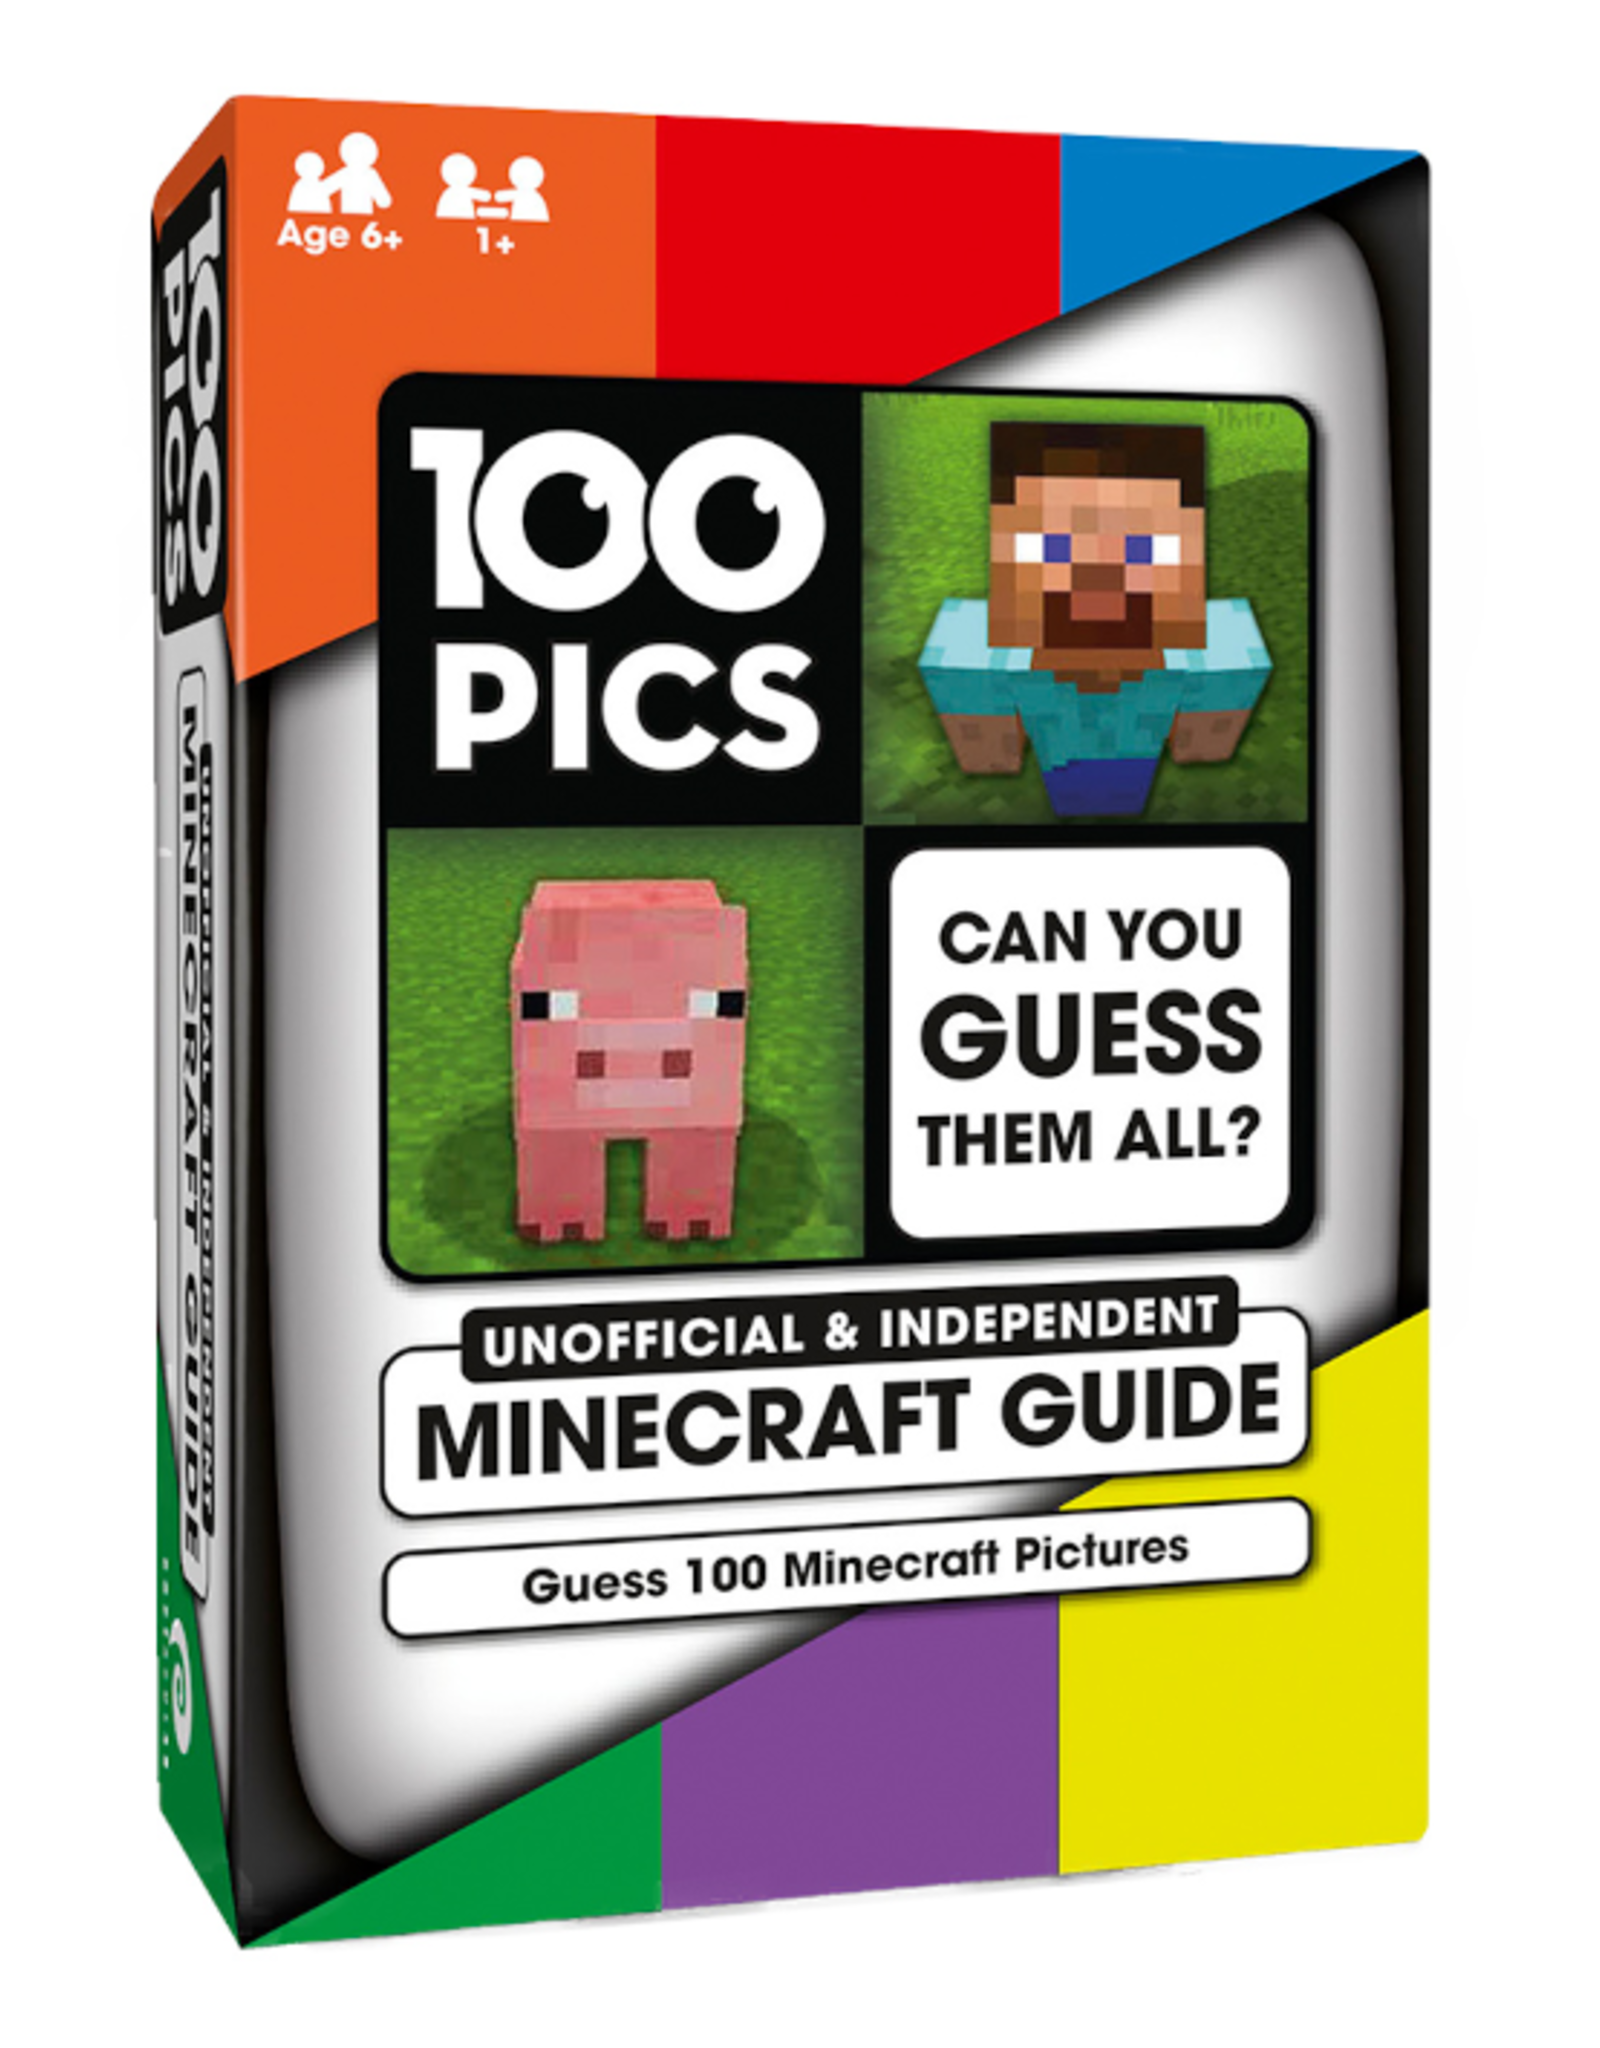 Poptacular - 100 Pics: Unofficial Minecraft